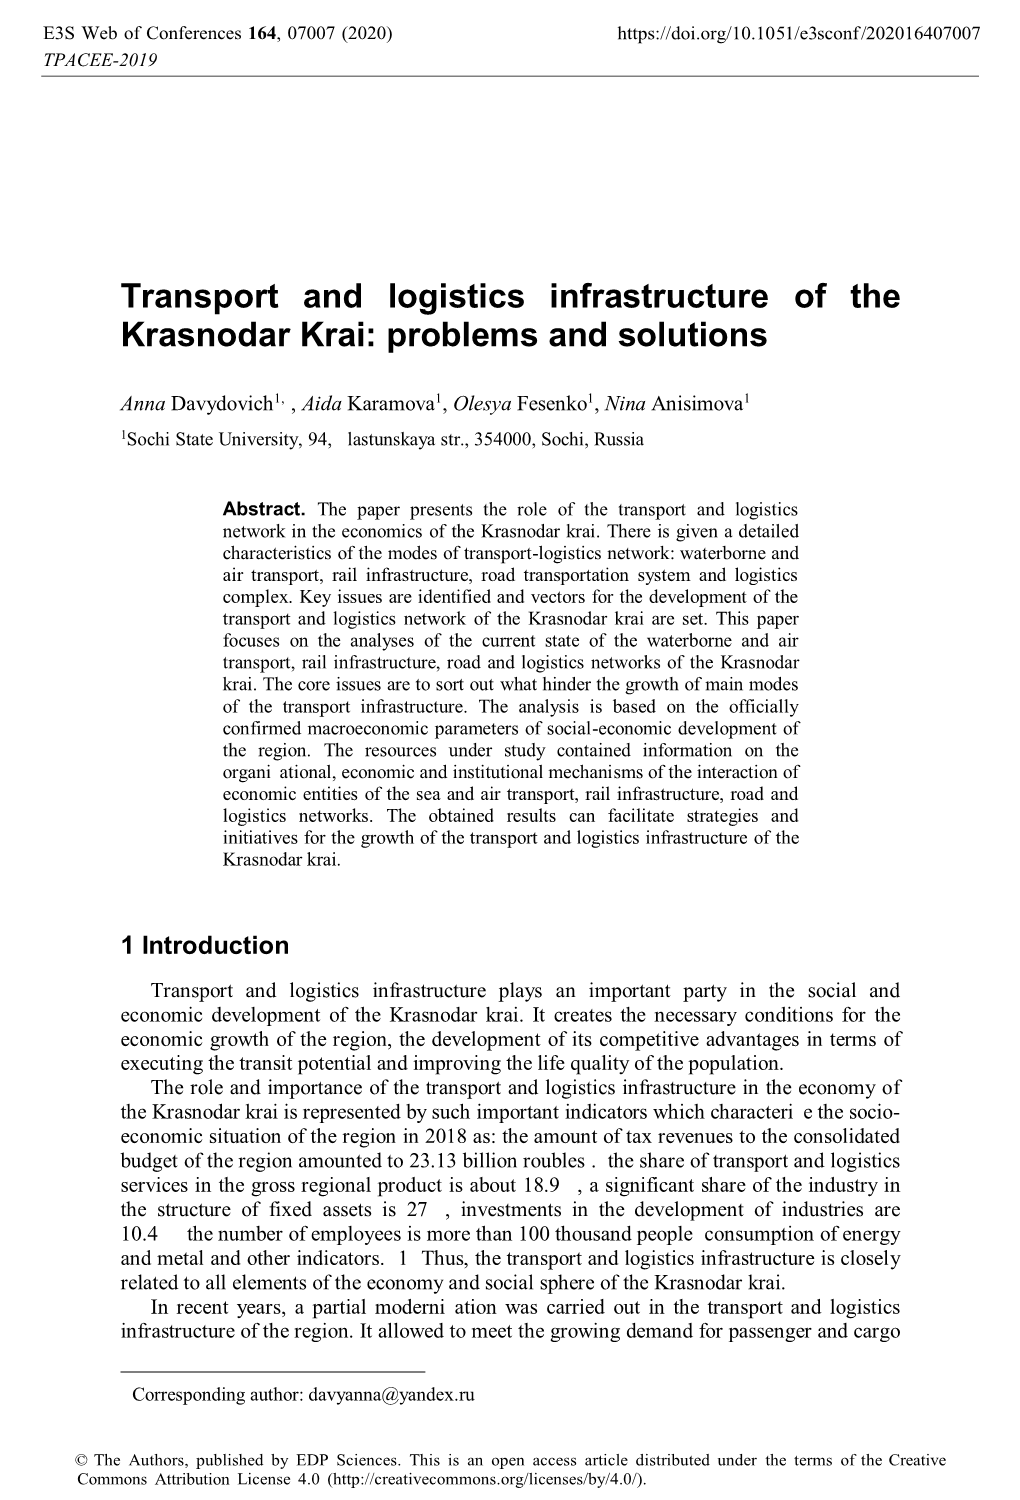 Transport and Logistics Infrastructure of the Krasnodar Krai: Problems and Solutions